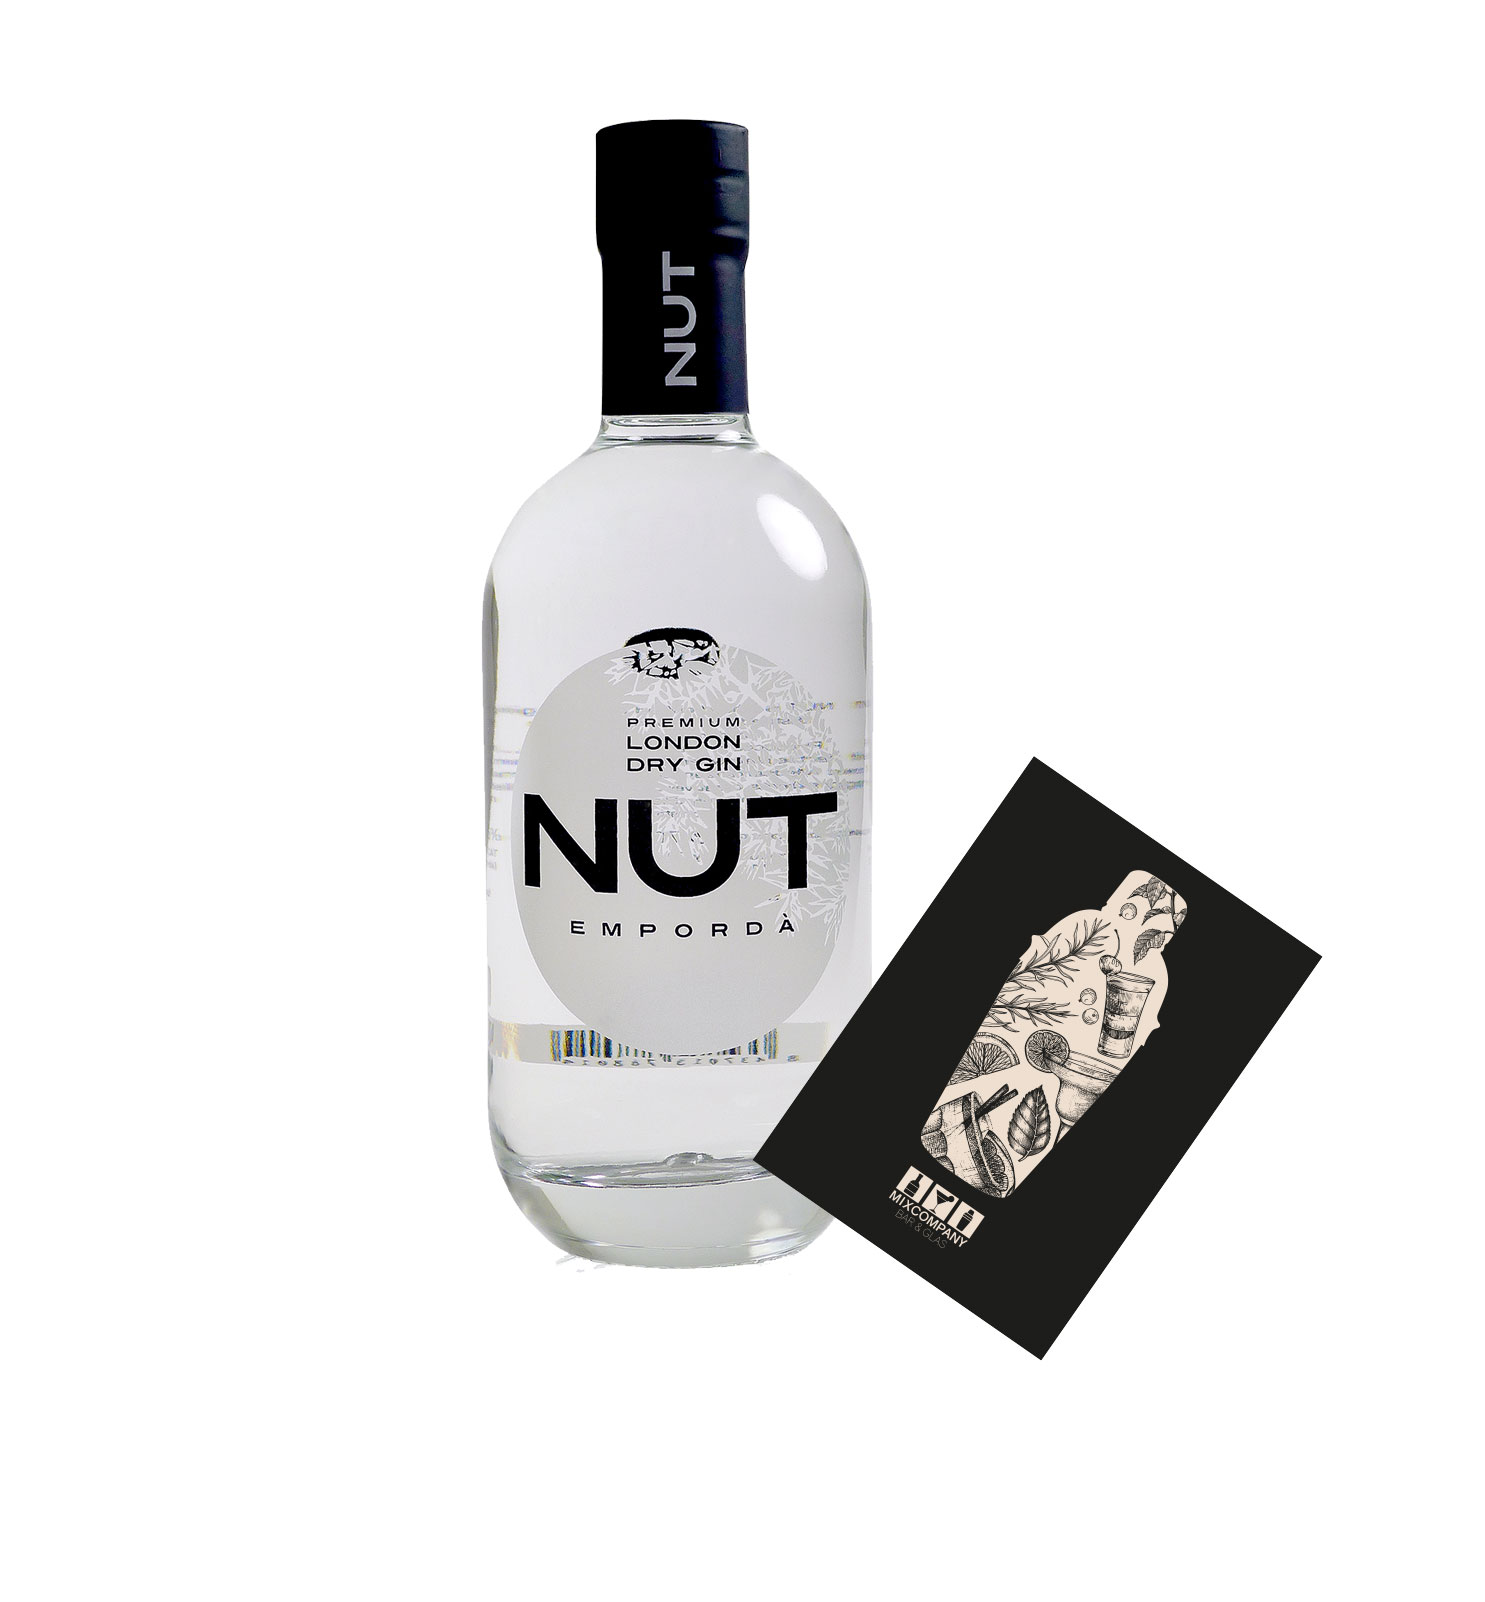 NUT Emporda London Dry Gin 0,7L (45% Vol) 13 Botanicals NUT Distillery- [Enthält Sulfite]